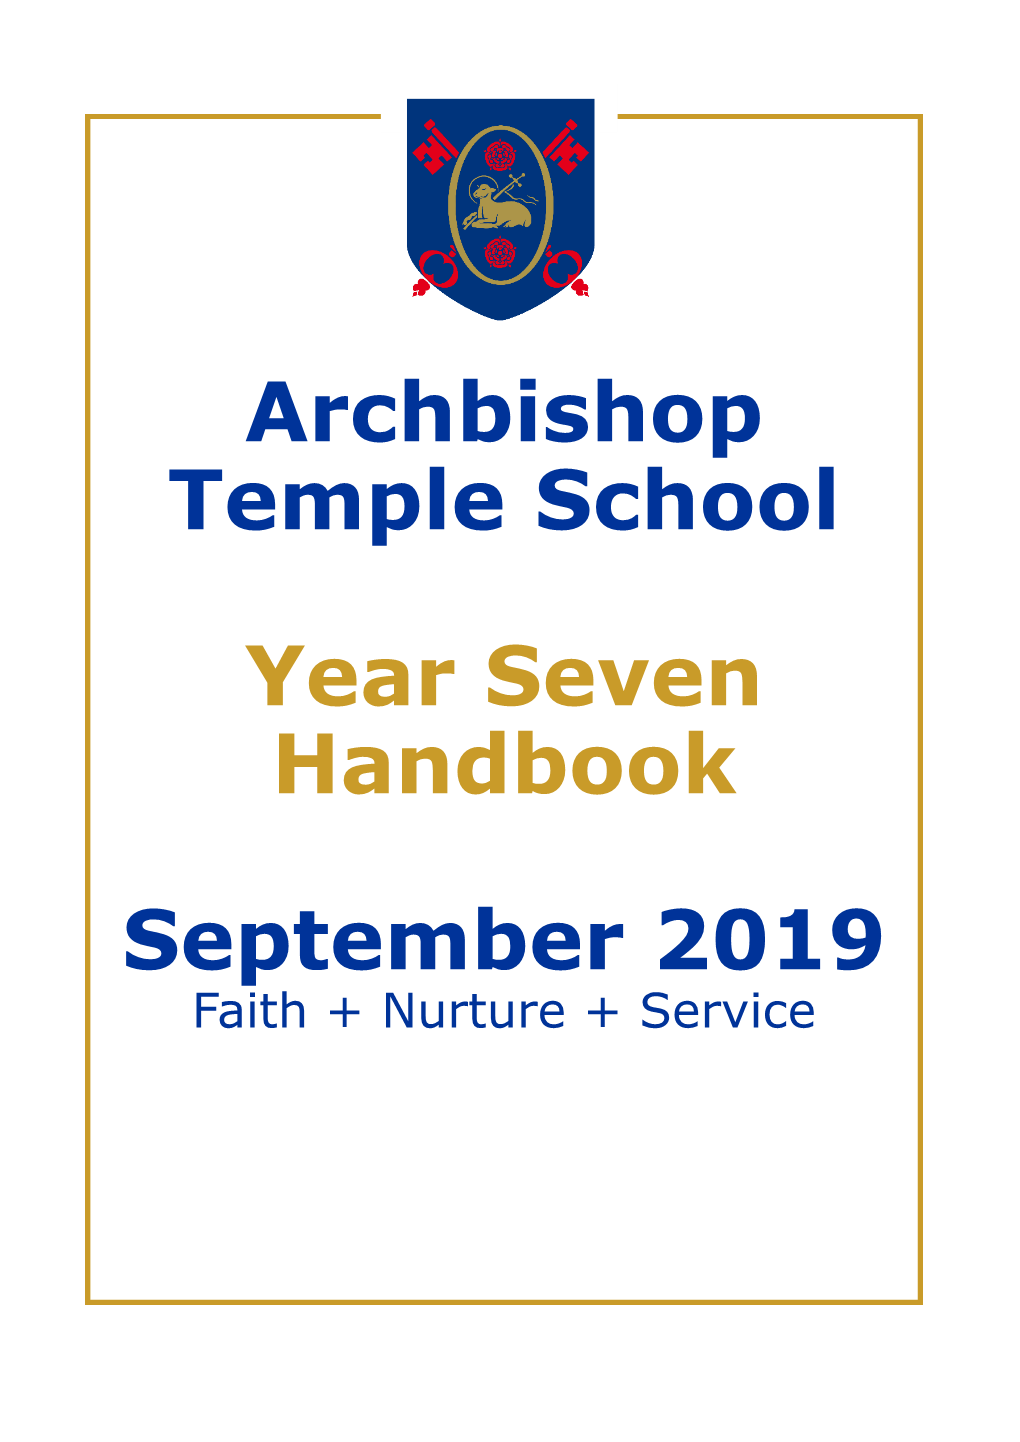 Archbishop Temple School Year Seven Handbook September 2019